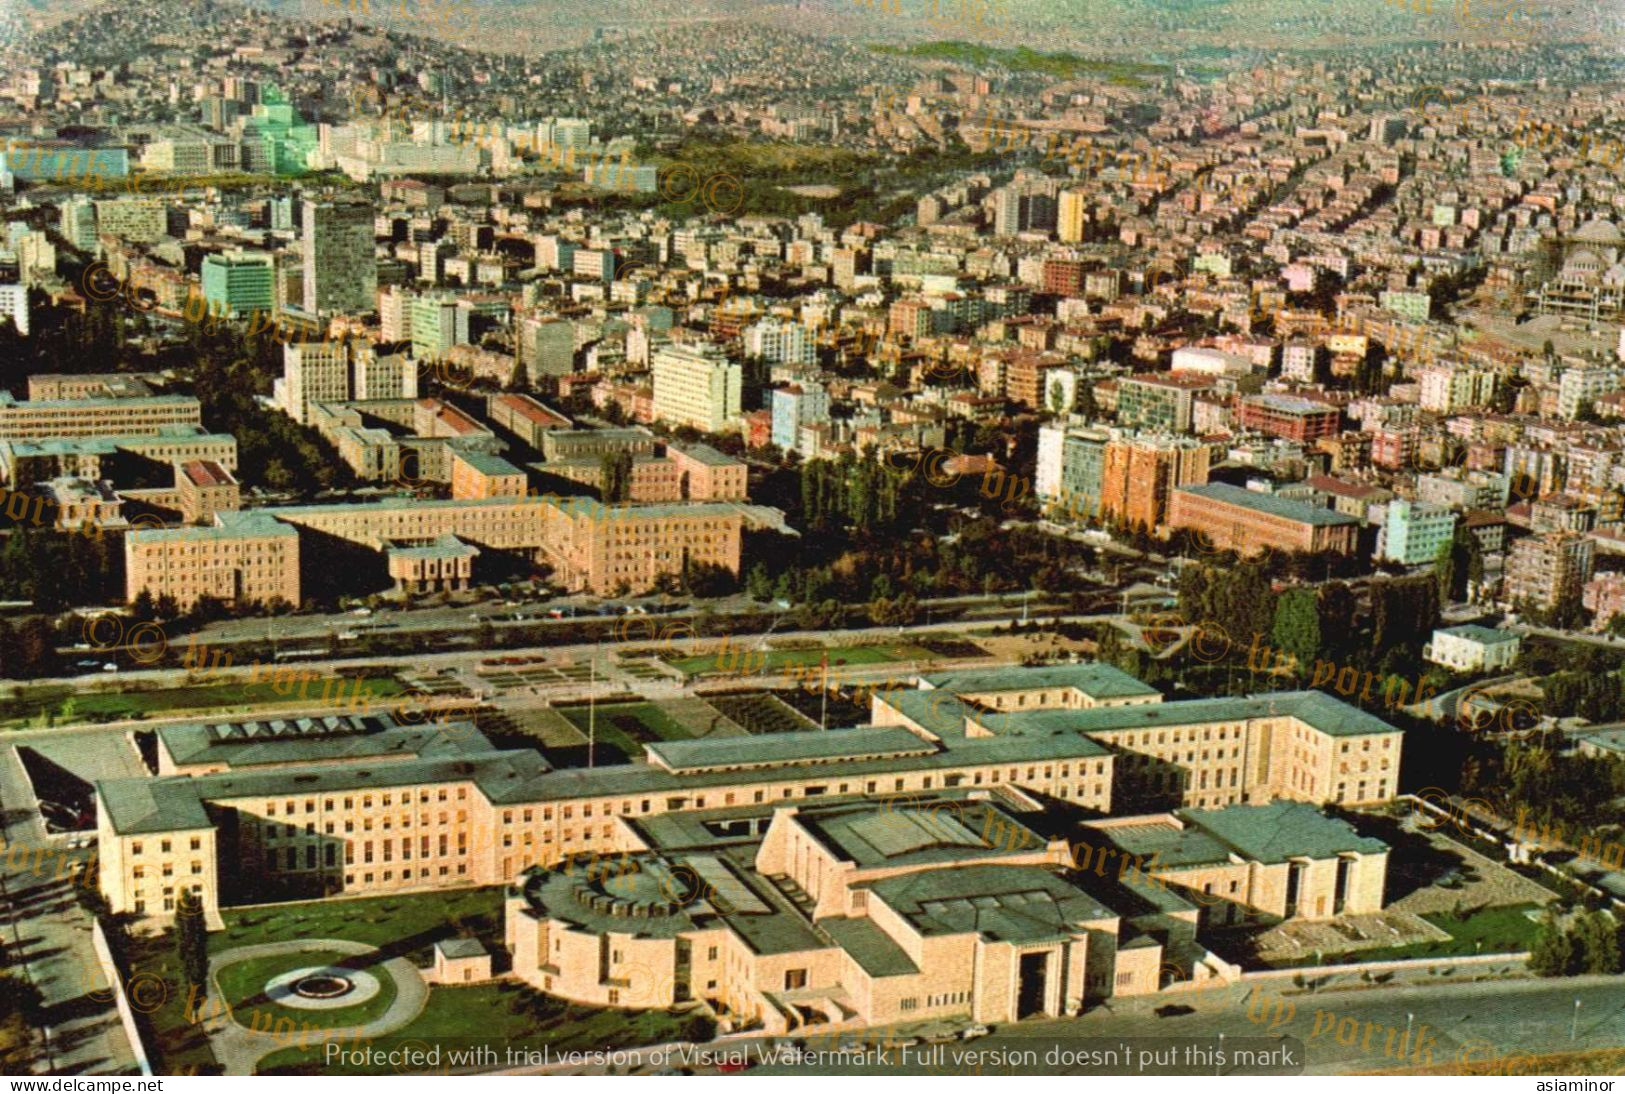 Postcard - 1970/80 - 10x15 Cm. | Turkey, Ankara - Grand National Assembly And Ministries. * - Turchia